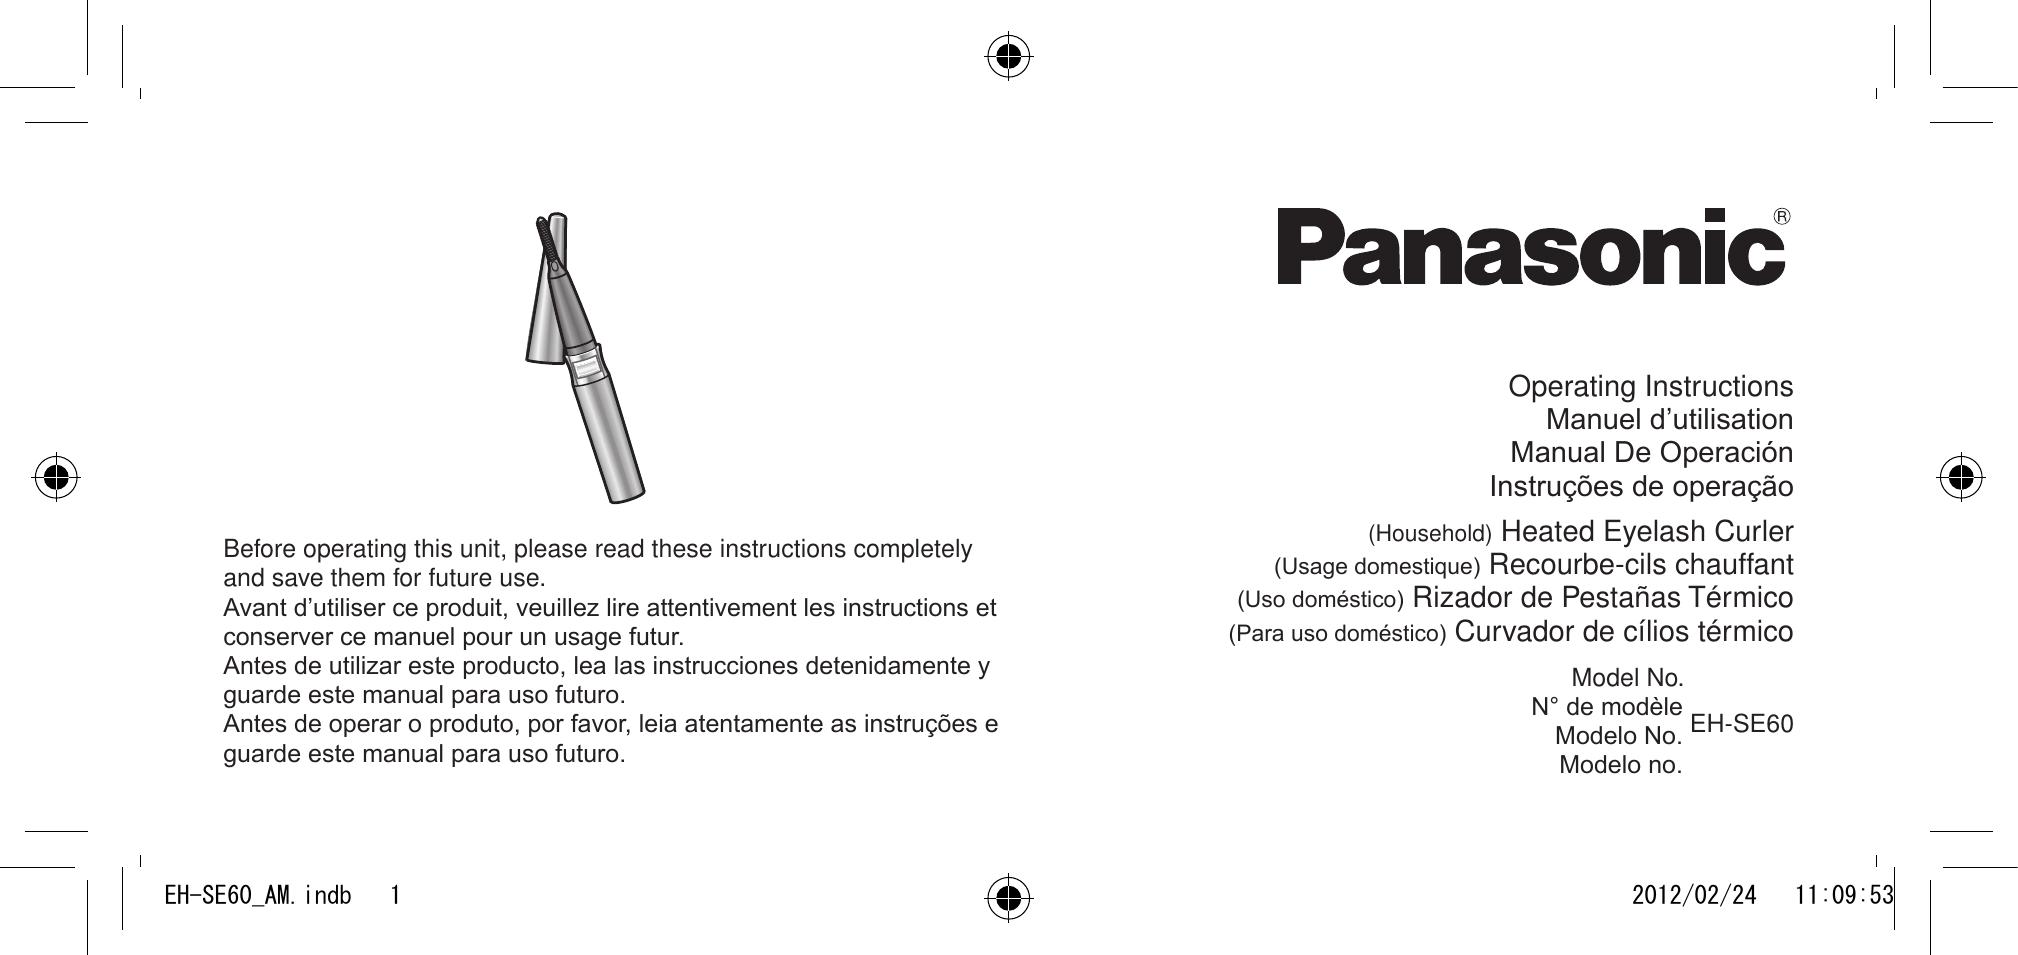 Panasonic EHSE60 Styling Iron User Manual